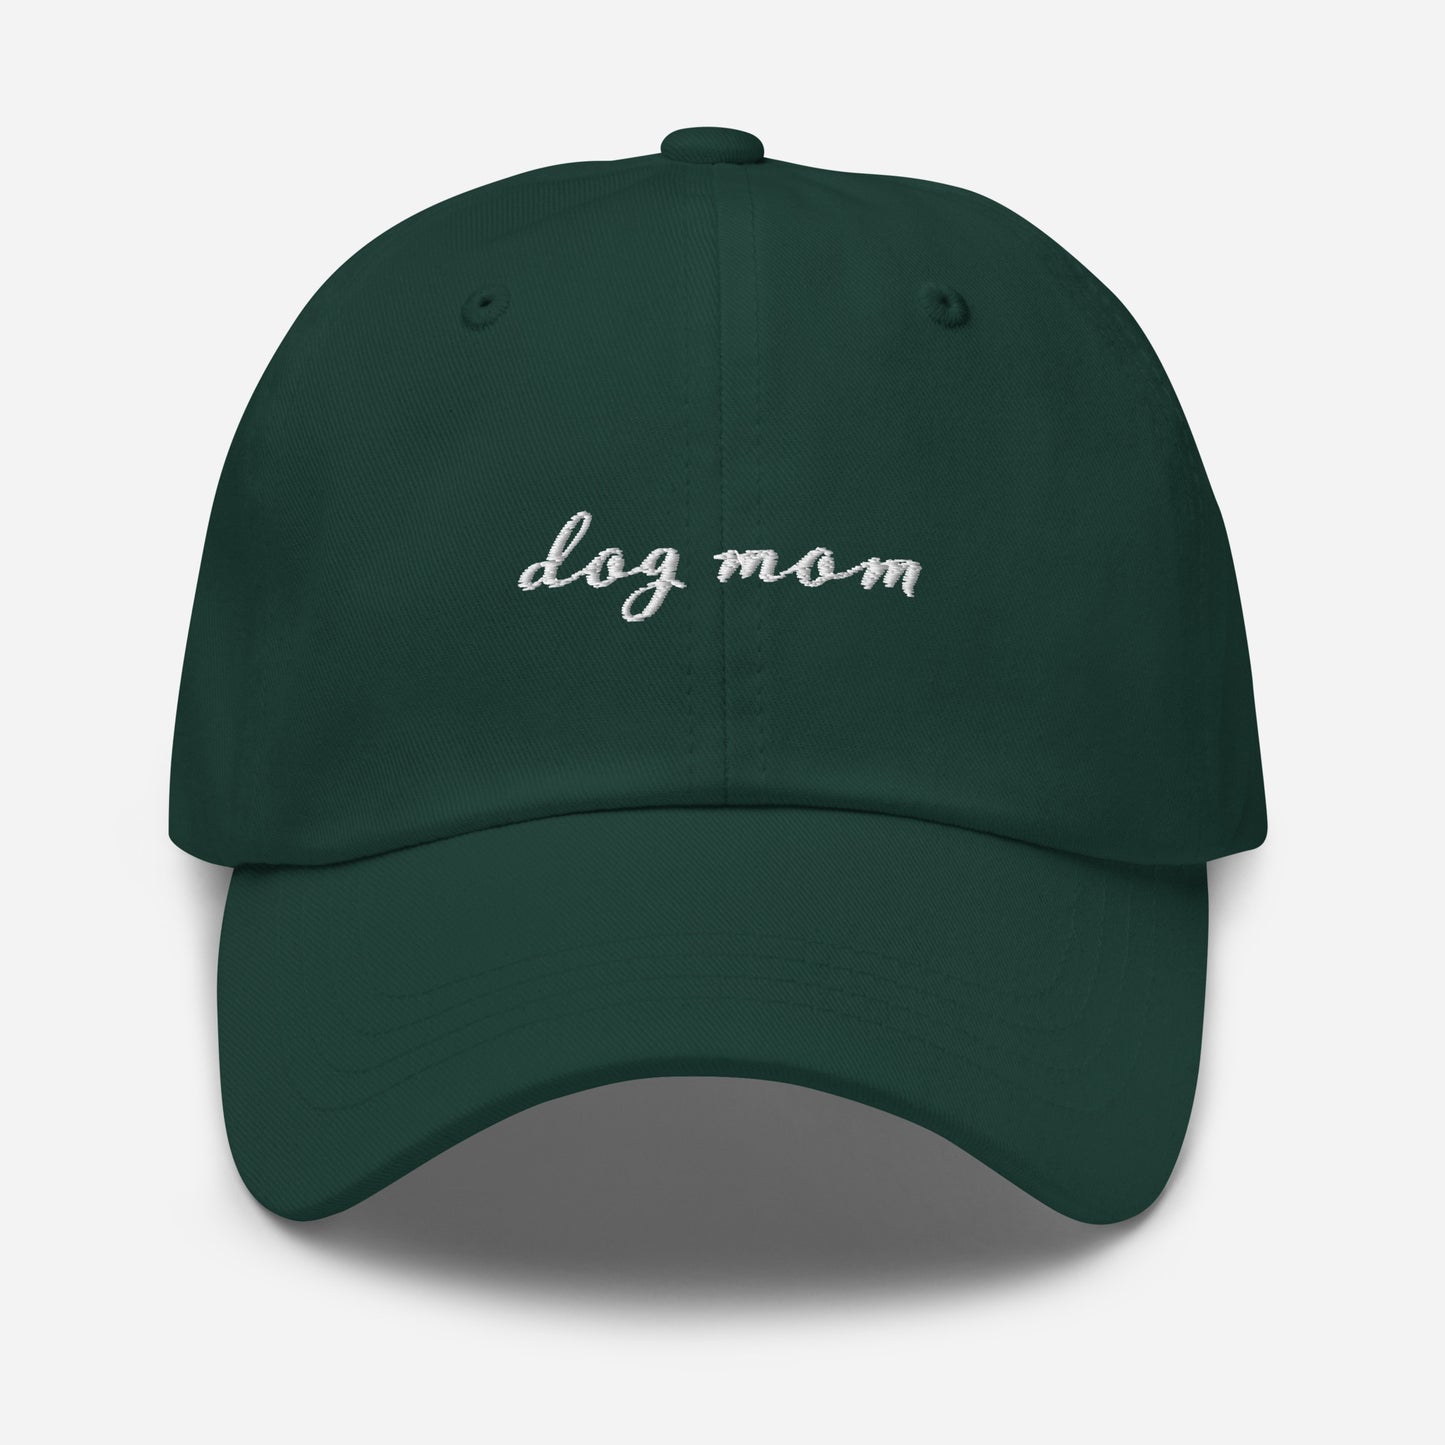 Fur/Dog/Cat/Plant Mom | Dad Hat | Embroidered